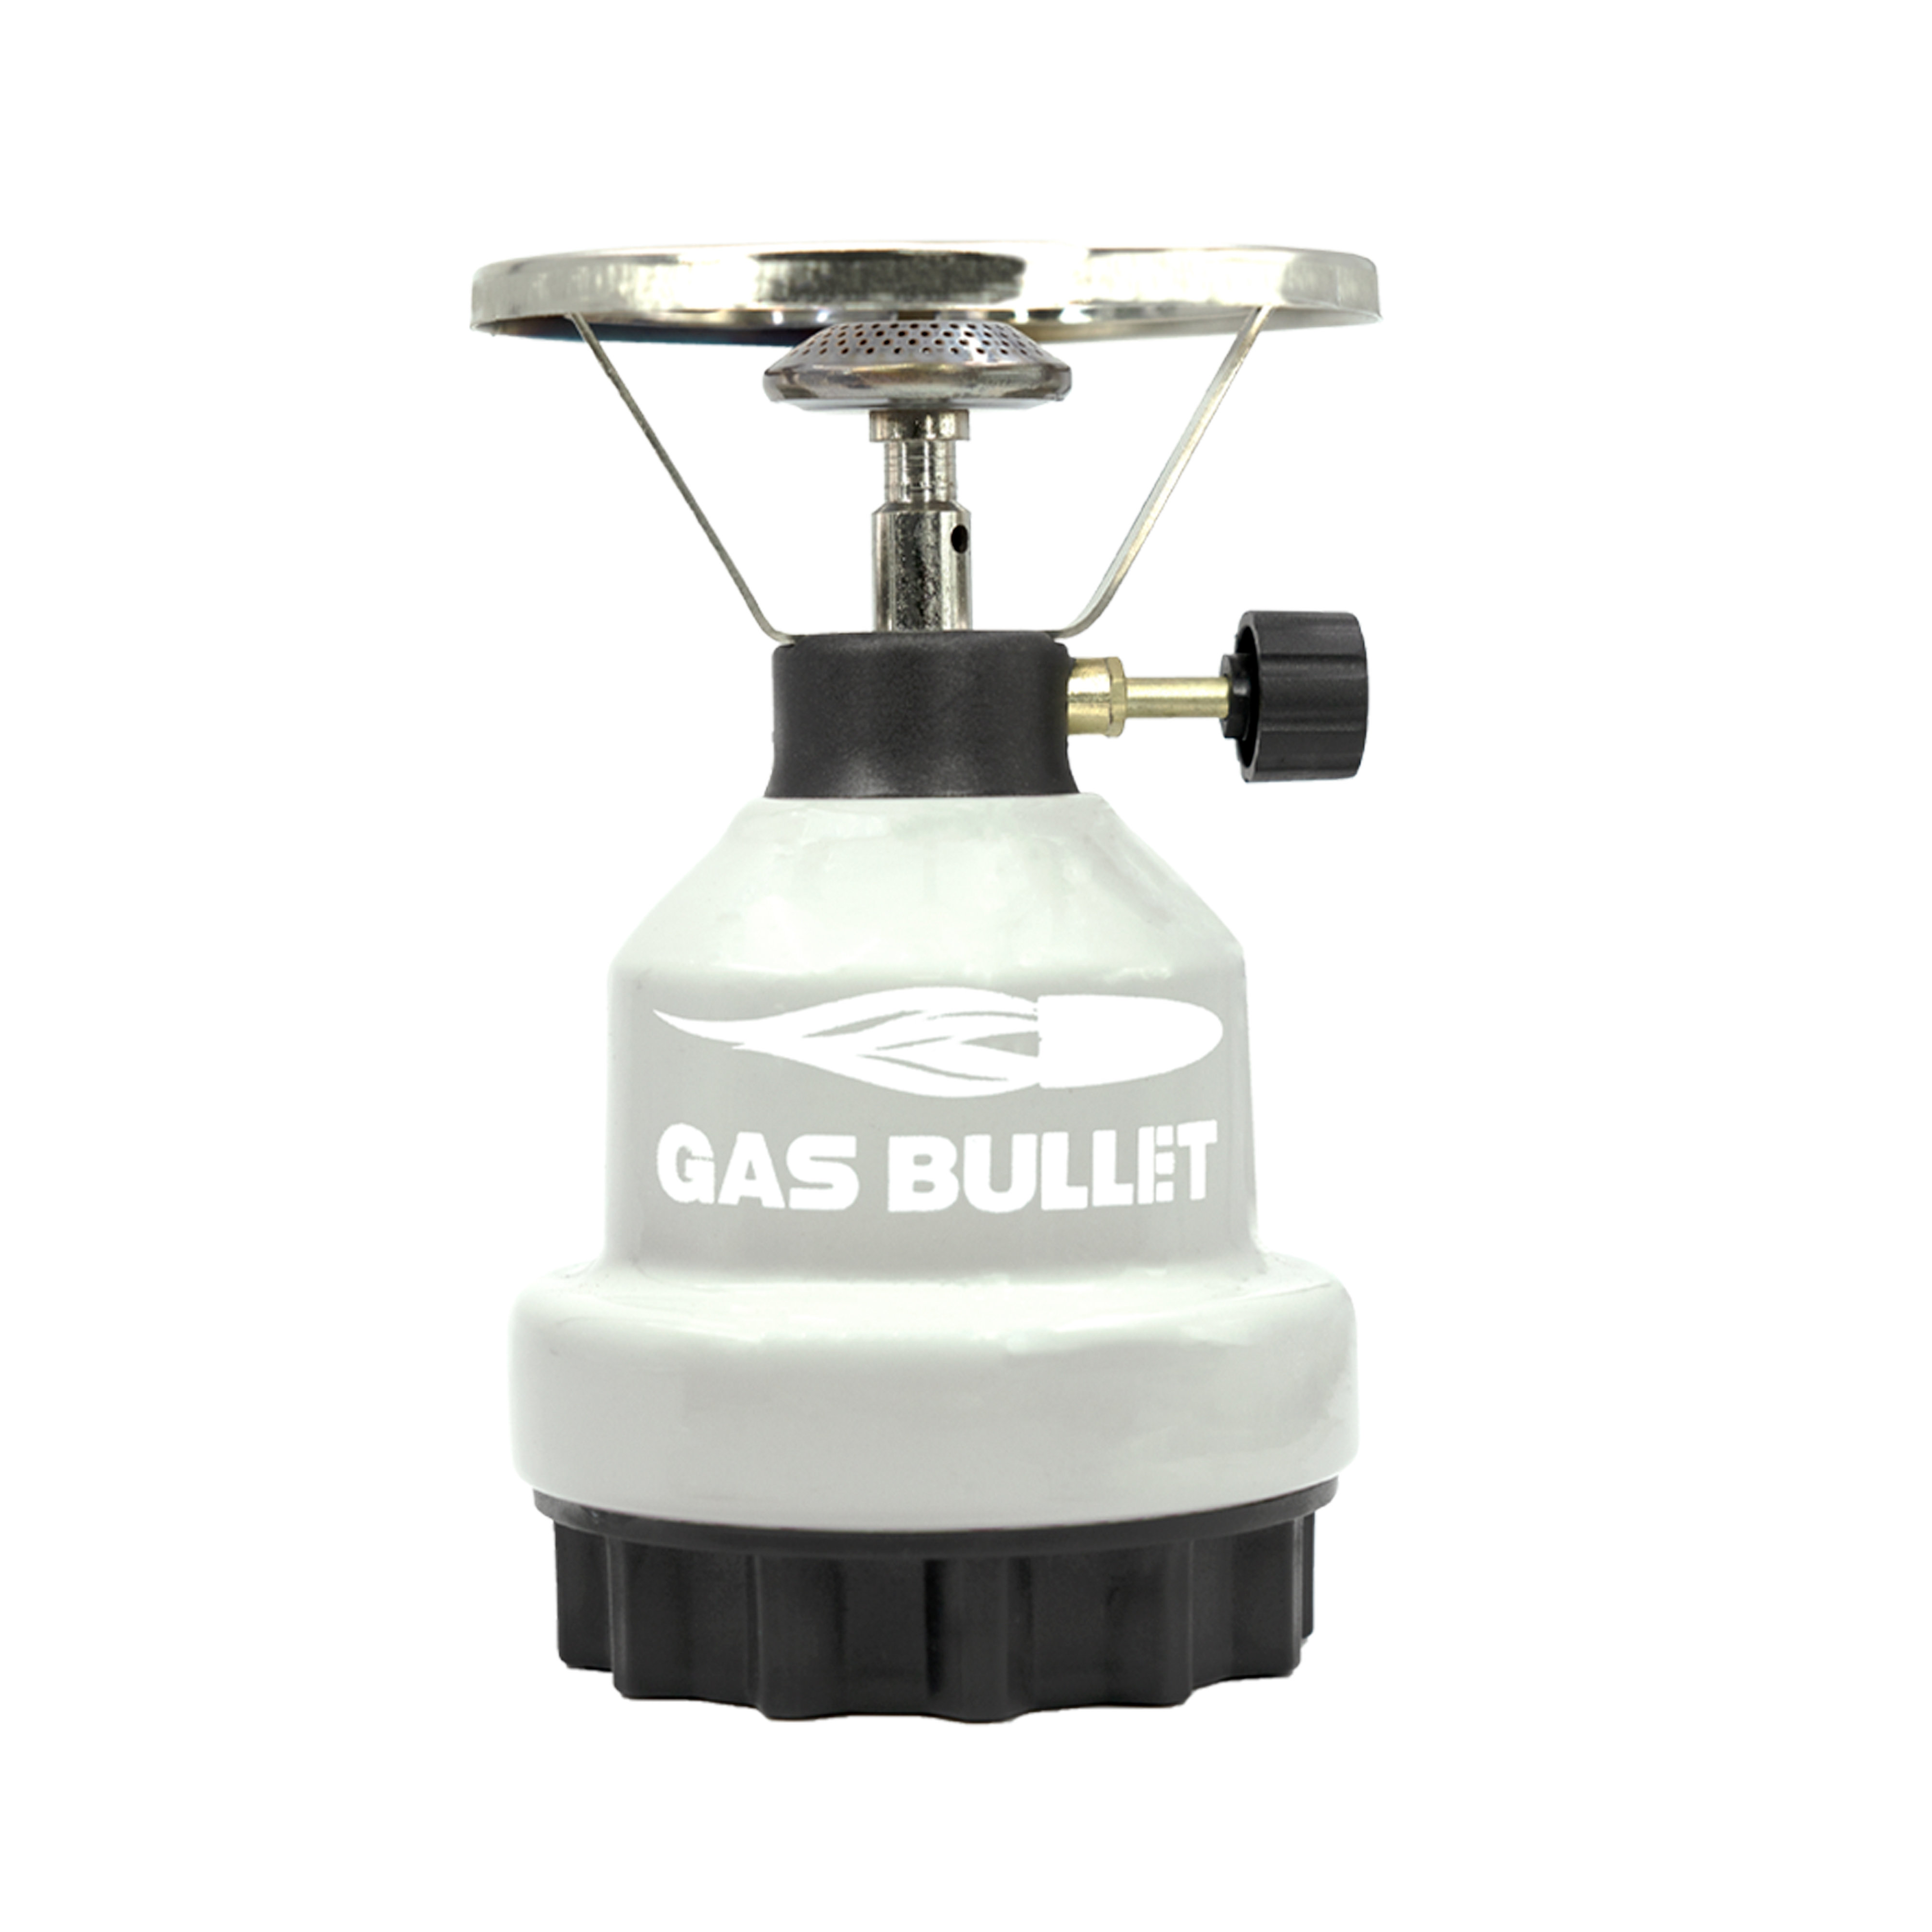 Gas Bullet Gas Kocher Metal